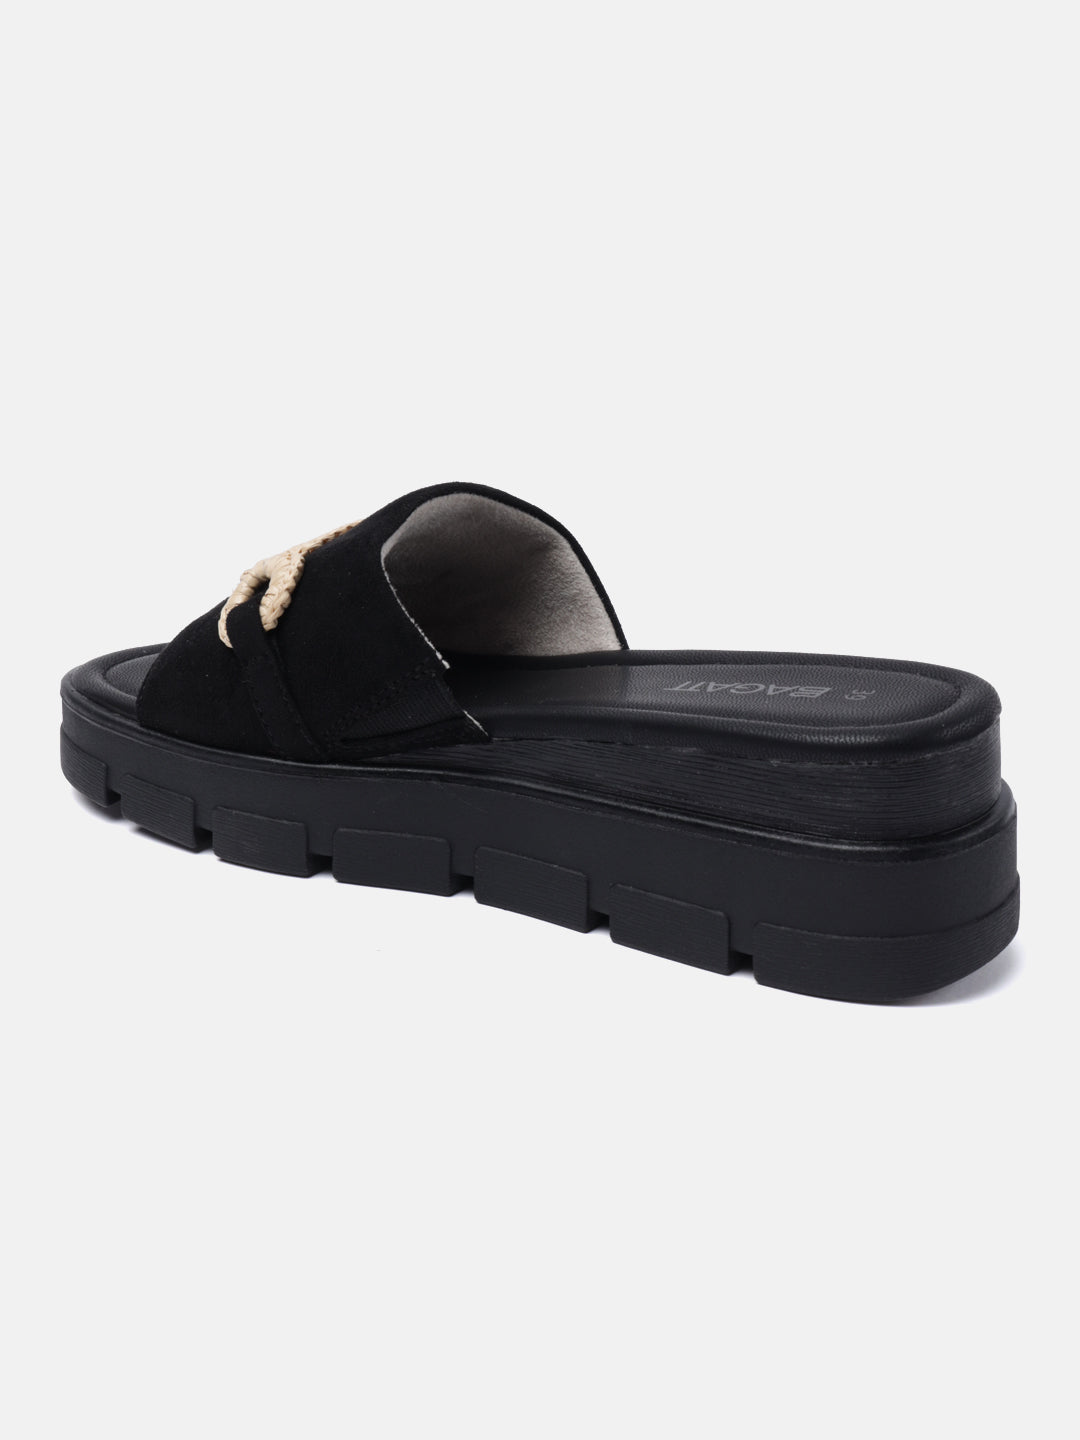 Mariella Black Flatform Sandals